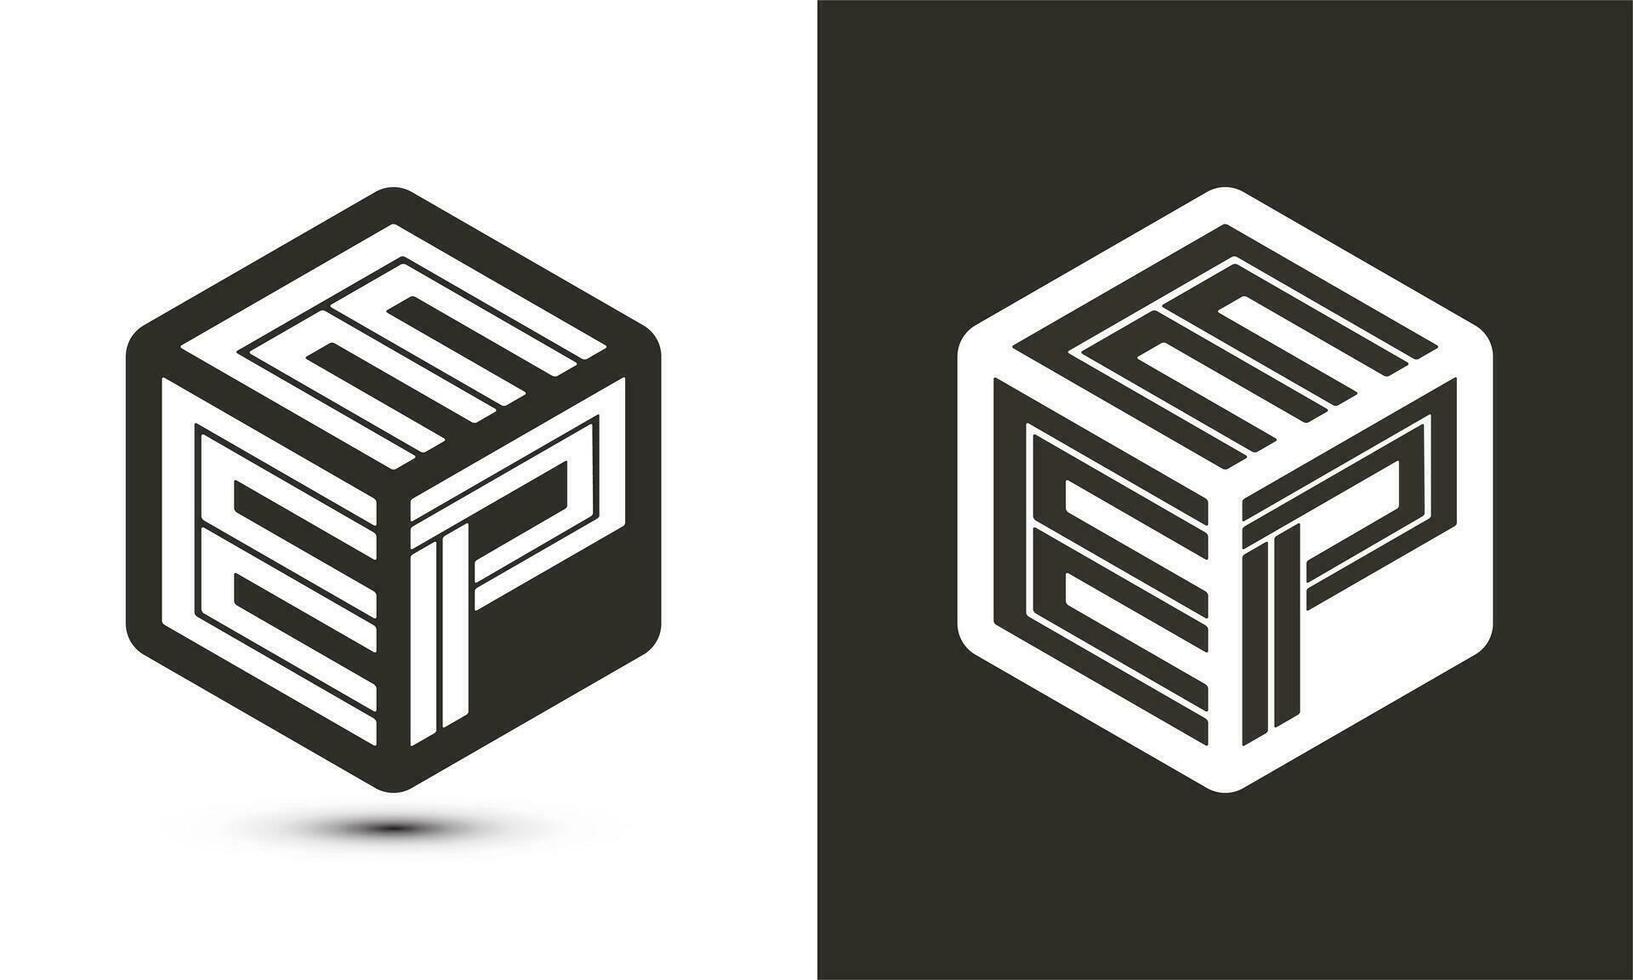 eep letra logo diseño con ilustrador cubo logo, vector logo moderno alfabeto fuente superposición estilo.